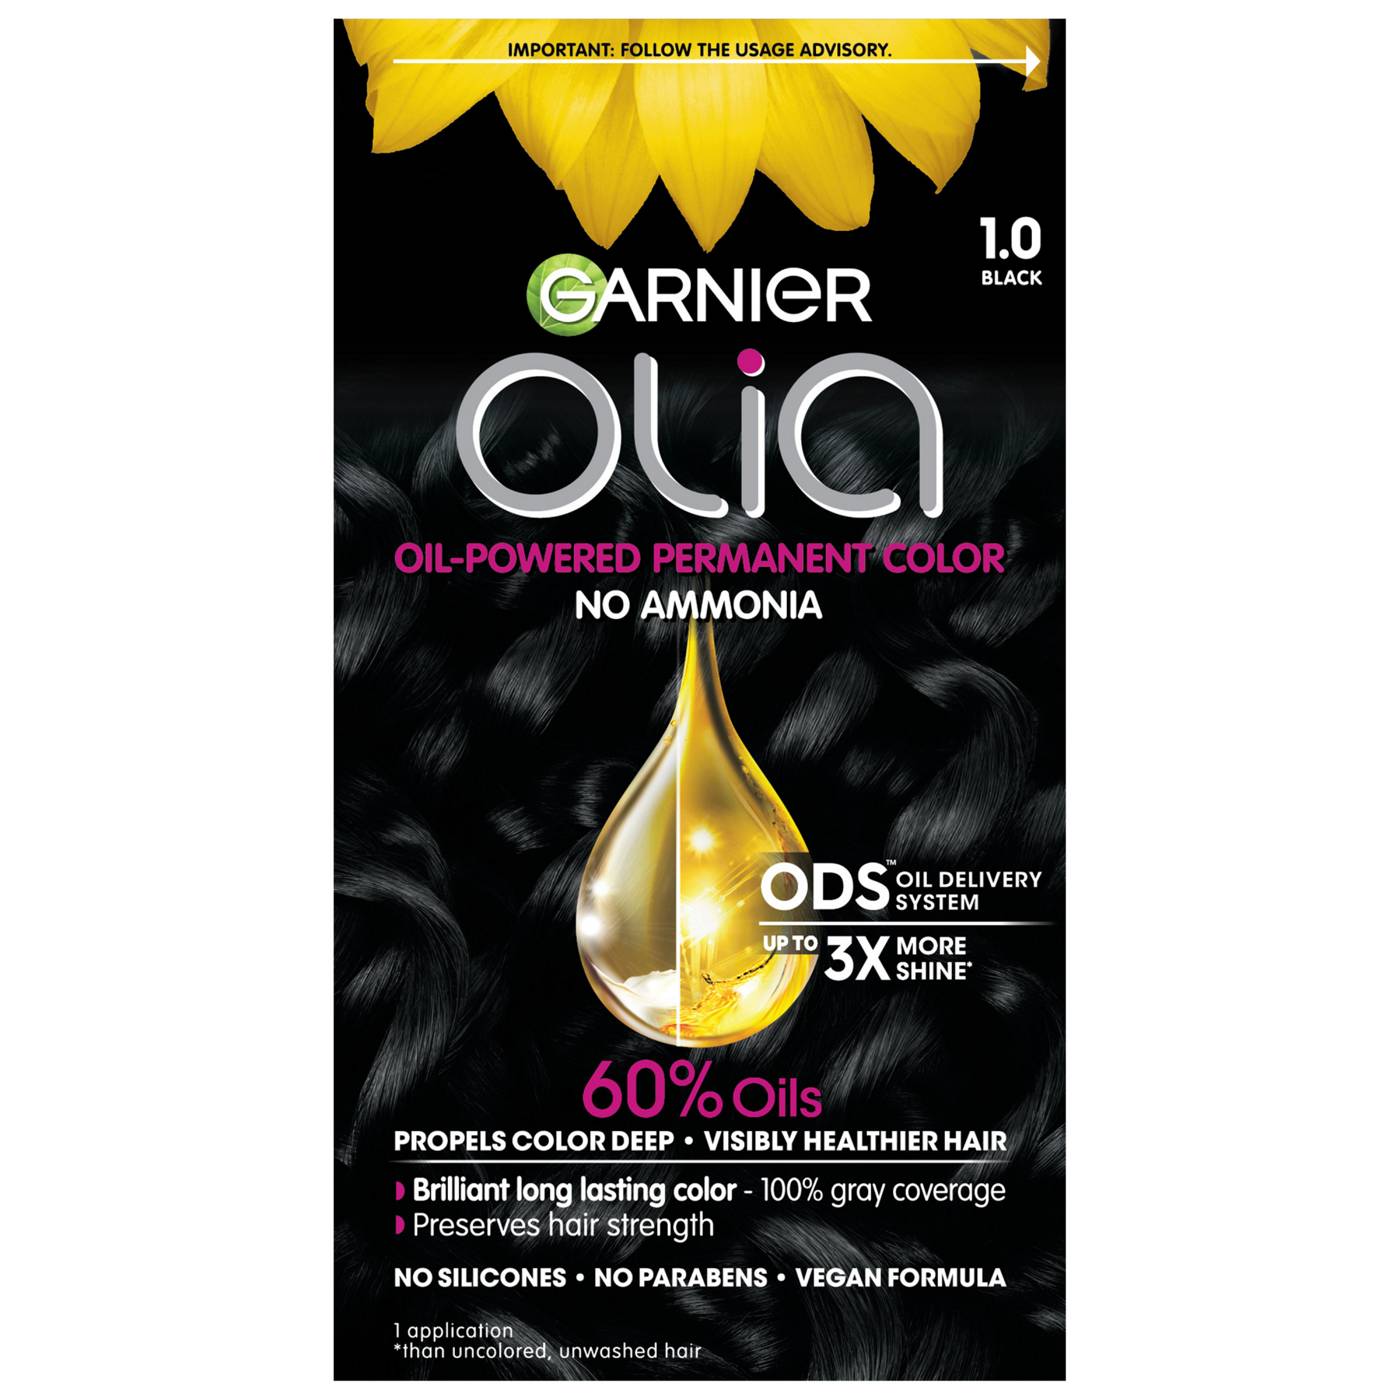 Garnier Olia Oil Powered Ammonia Free Permanent Hair Color 1.0 Black; image 1 of 9